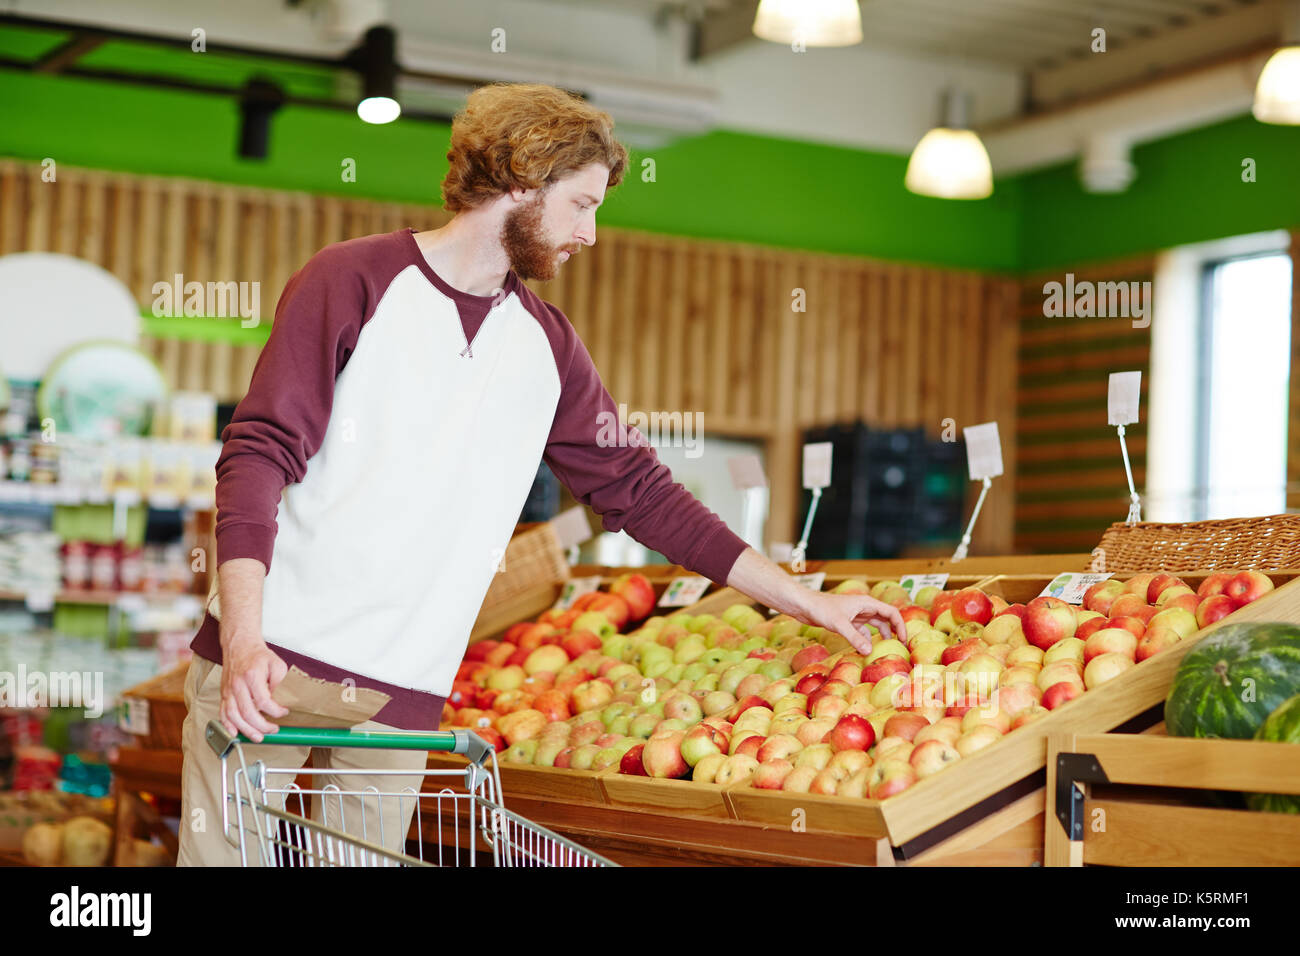 Guy choosing apples Stock Photo